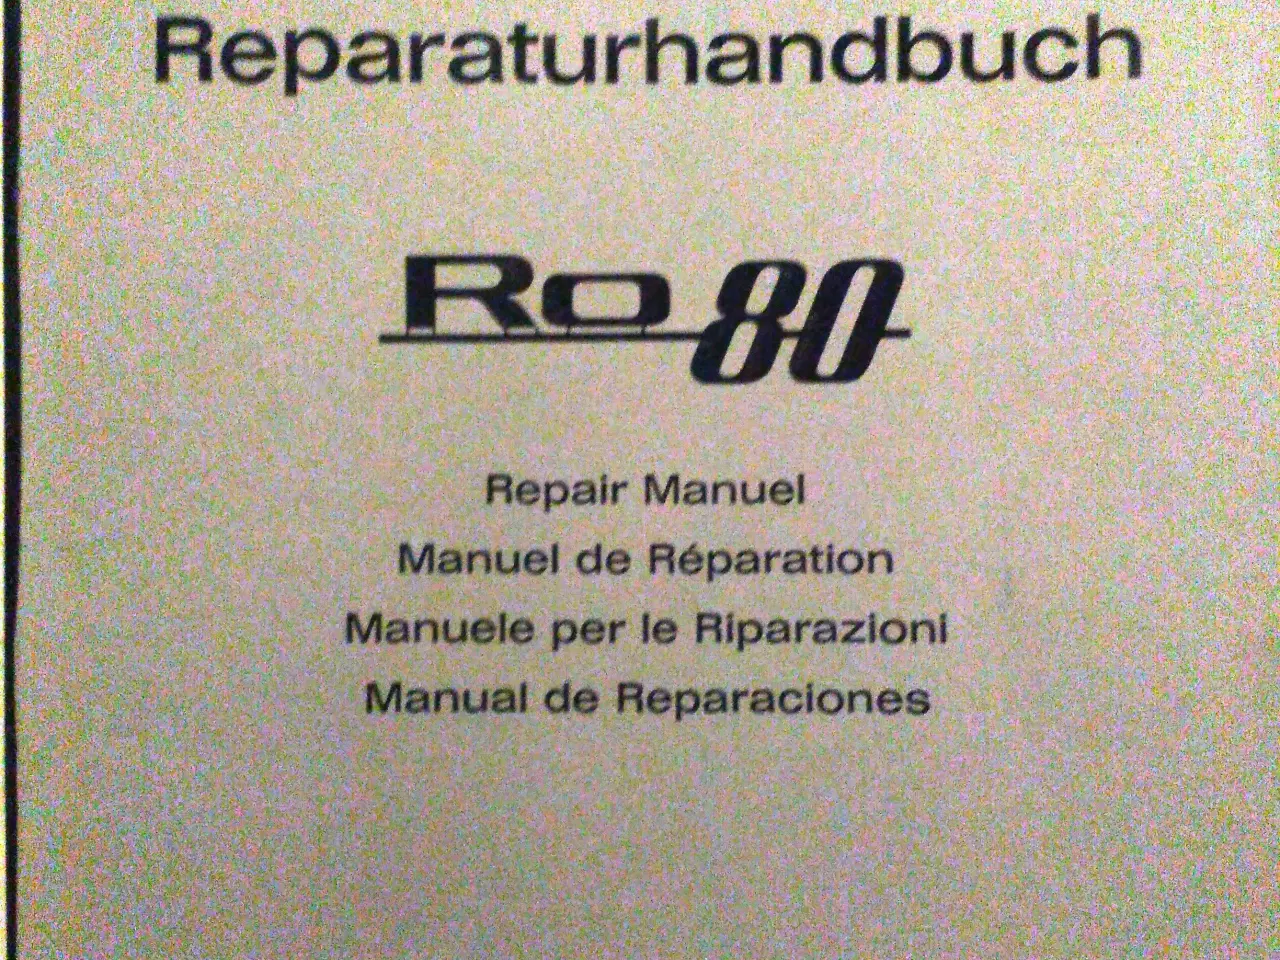 Billede 1 - NSU RO 80, Reparaturhandbuch.